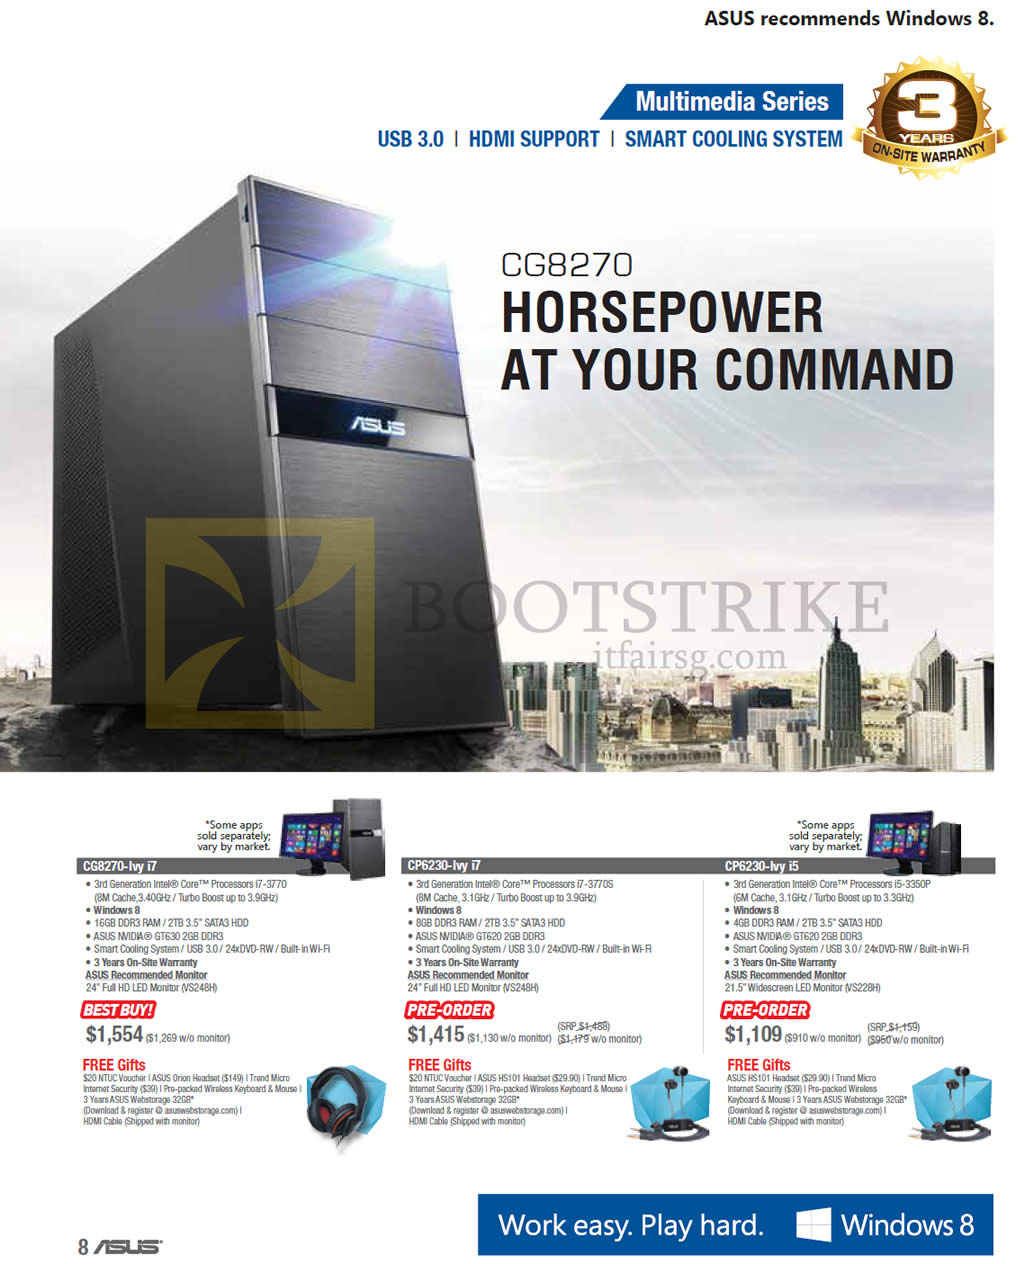 COMEX 2013 price list image brochure of ASUS Desktop PCs CG8270 CG8270-Ivy I7, CP6230-Ivy I7, CP6230-Ivy I5